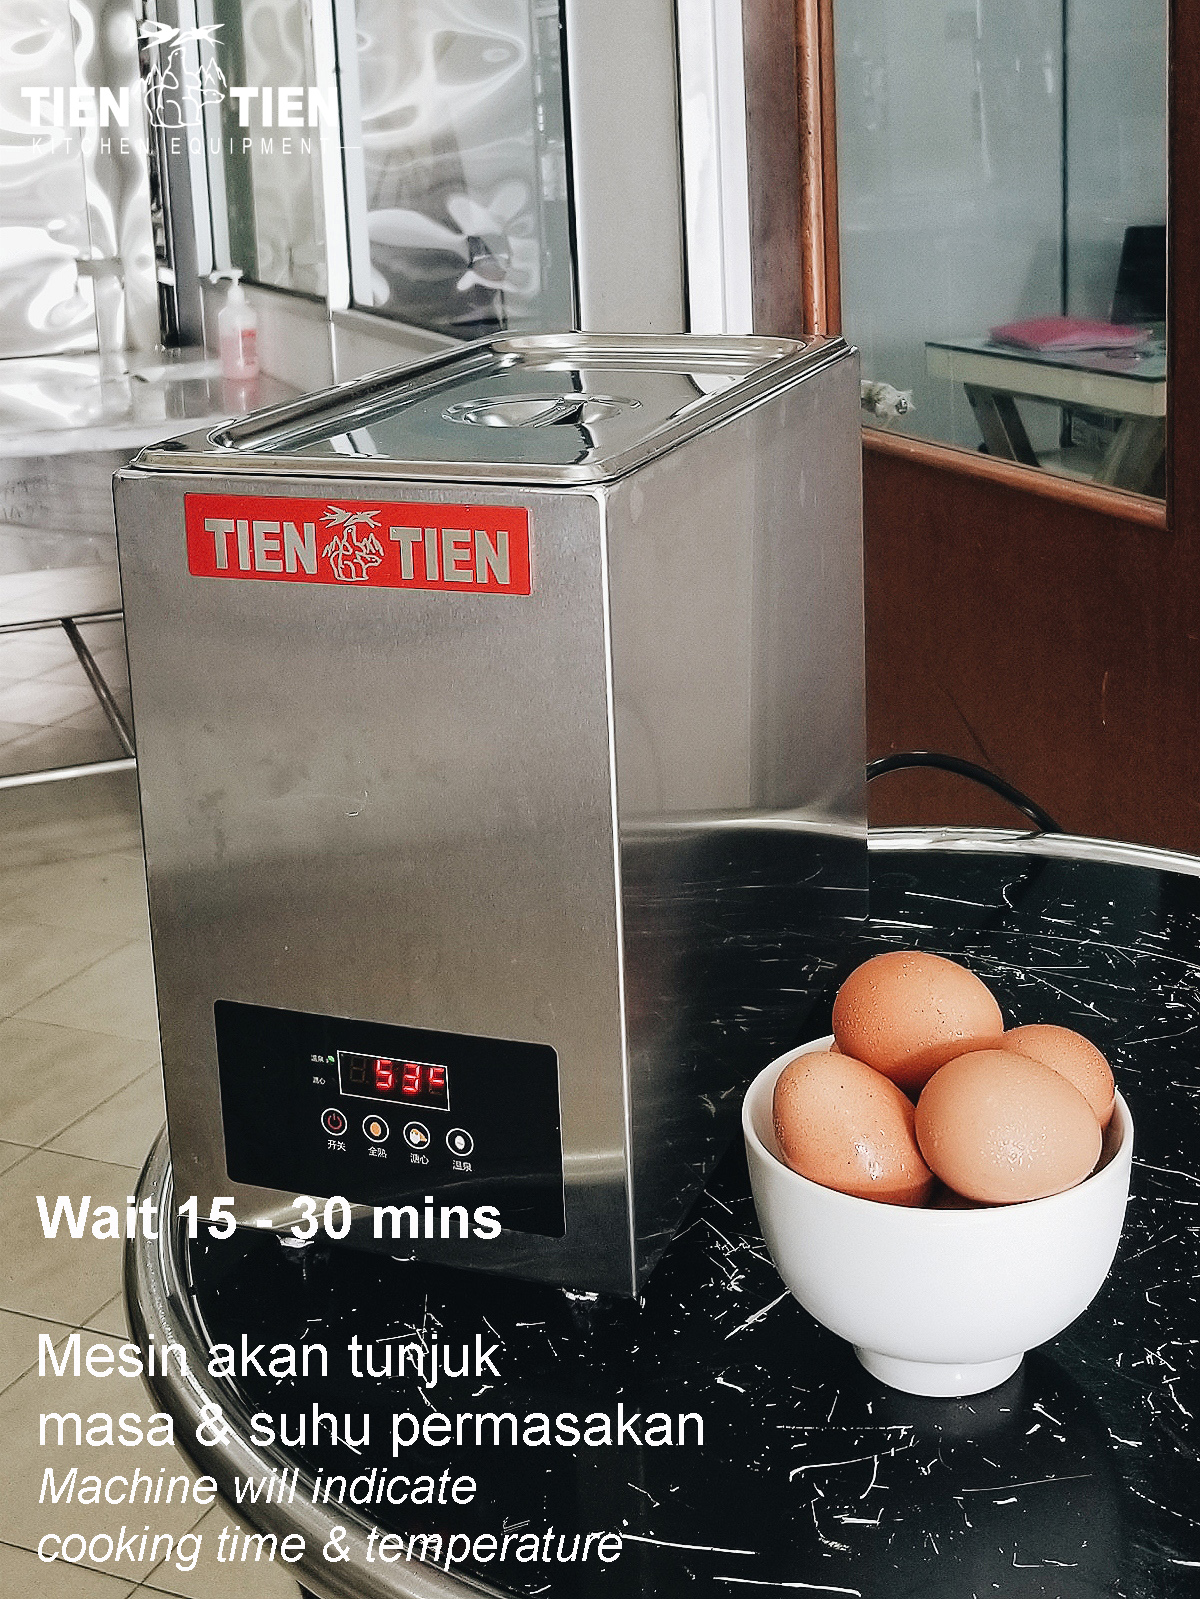 Tien-tien-step6-Tamago-Egg-Machine-Malaysia-Soft-Boiled-Egg-Maker-Egg-Boiler-.jpg